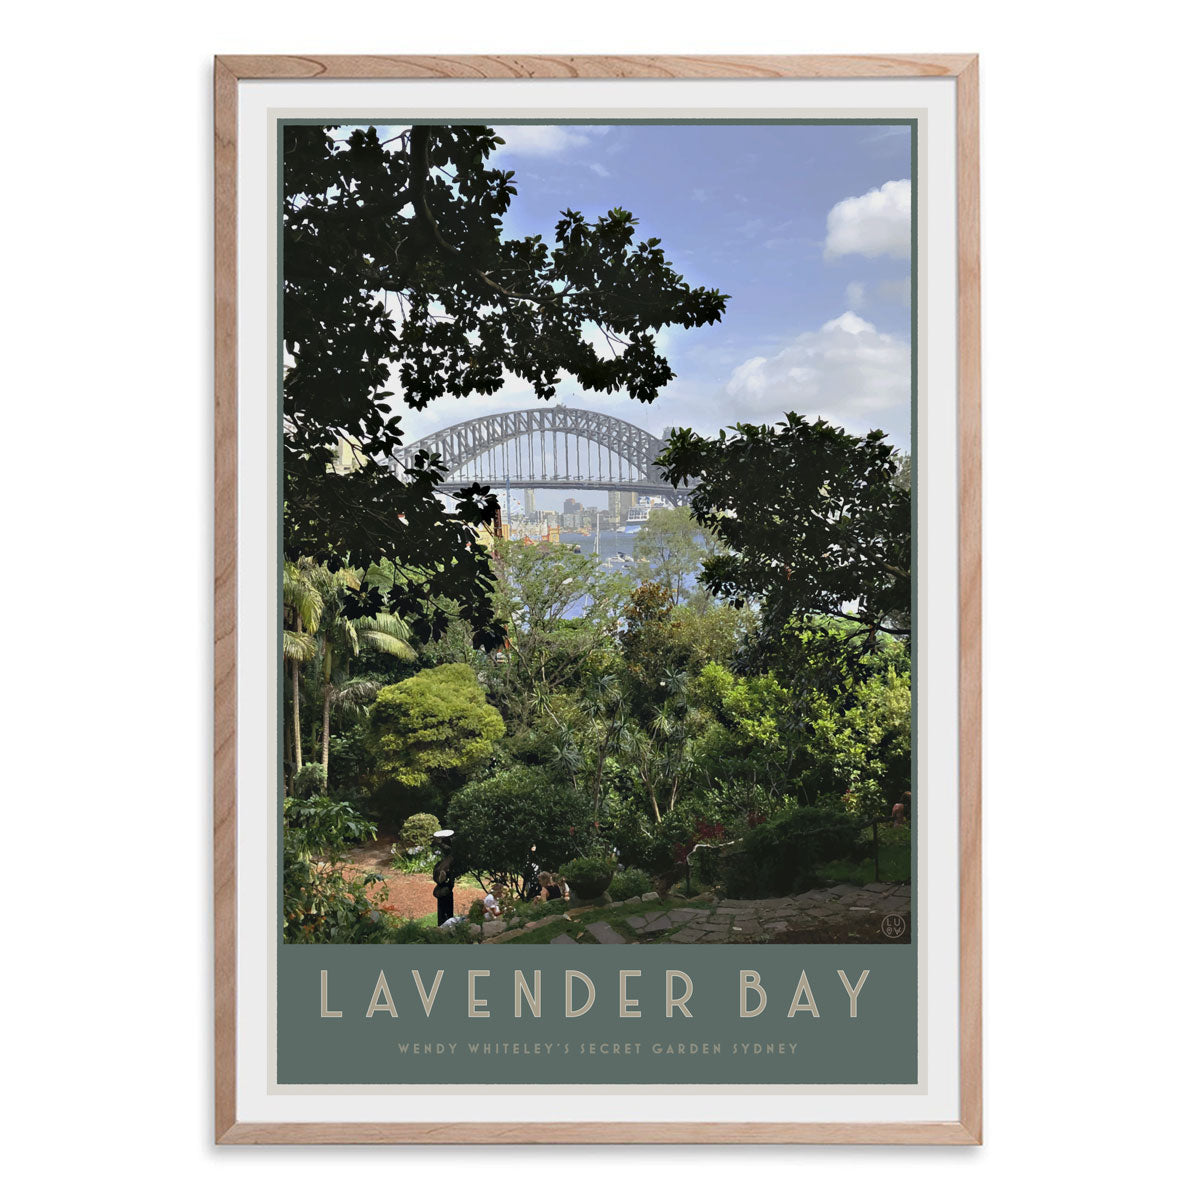 Lavender Bay vintage style travel black framed print by places we luv